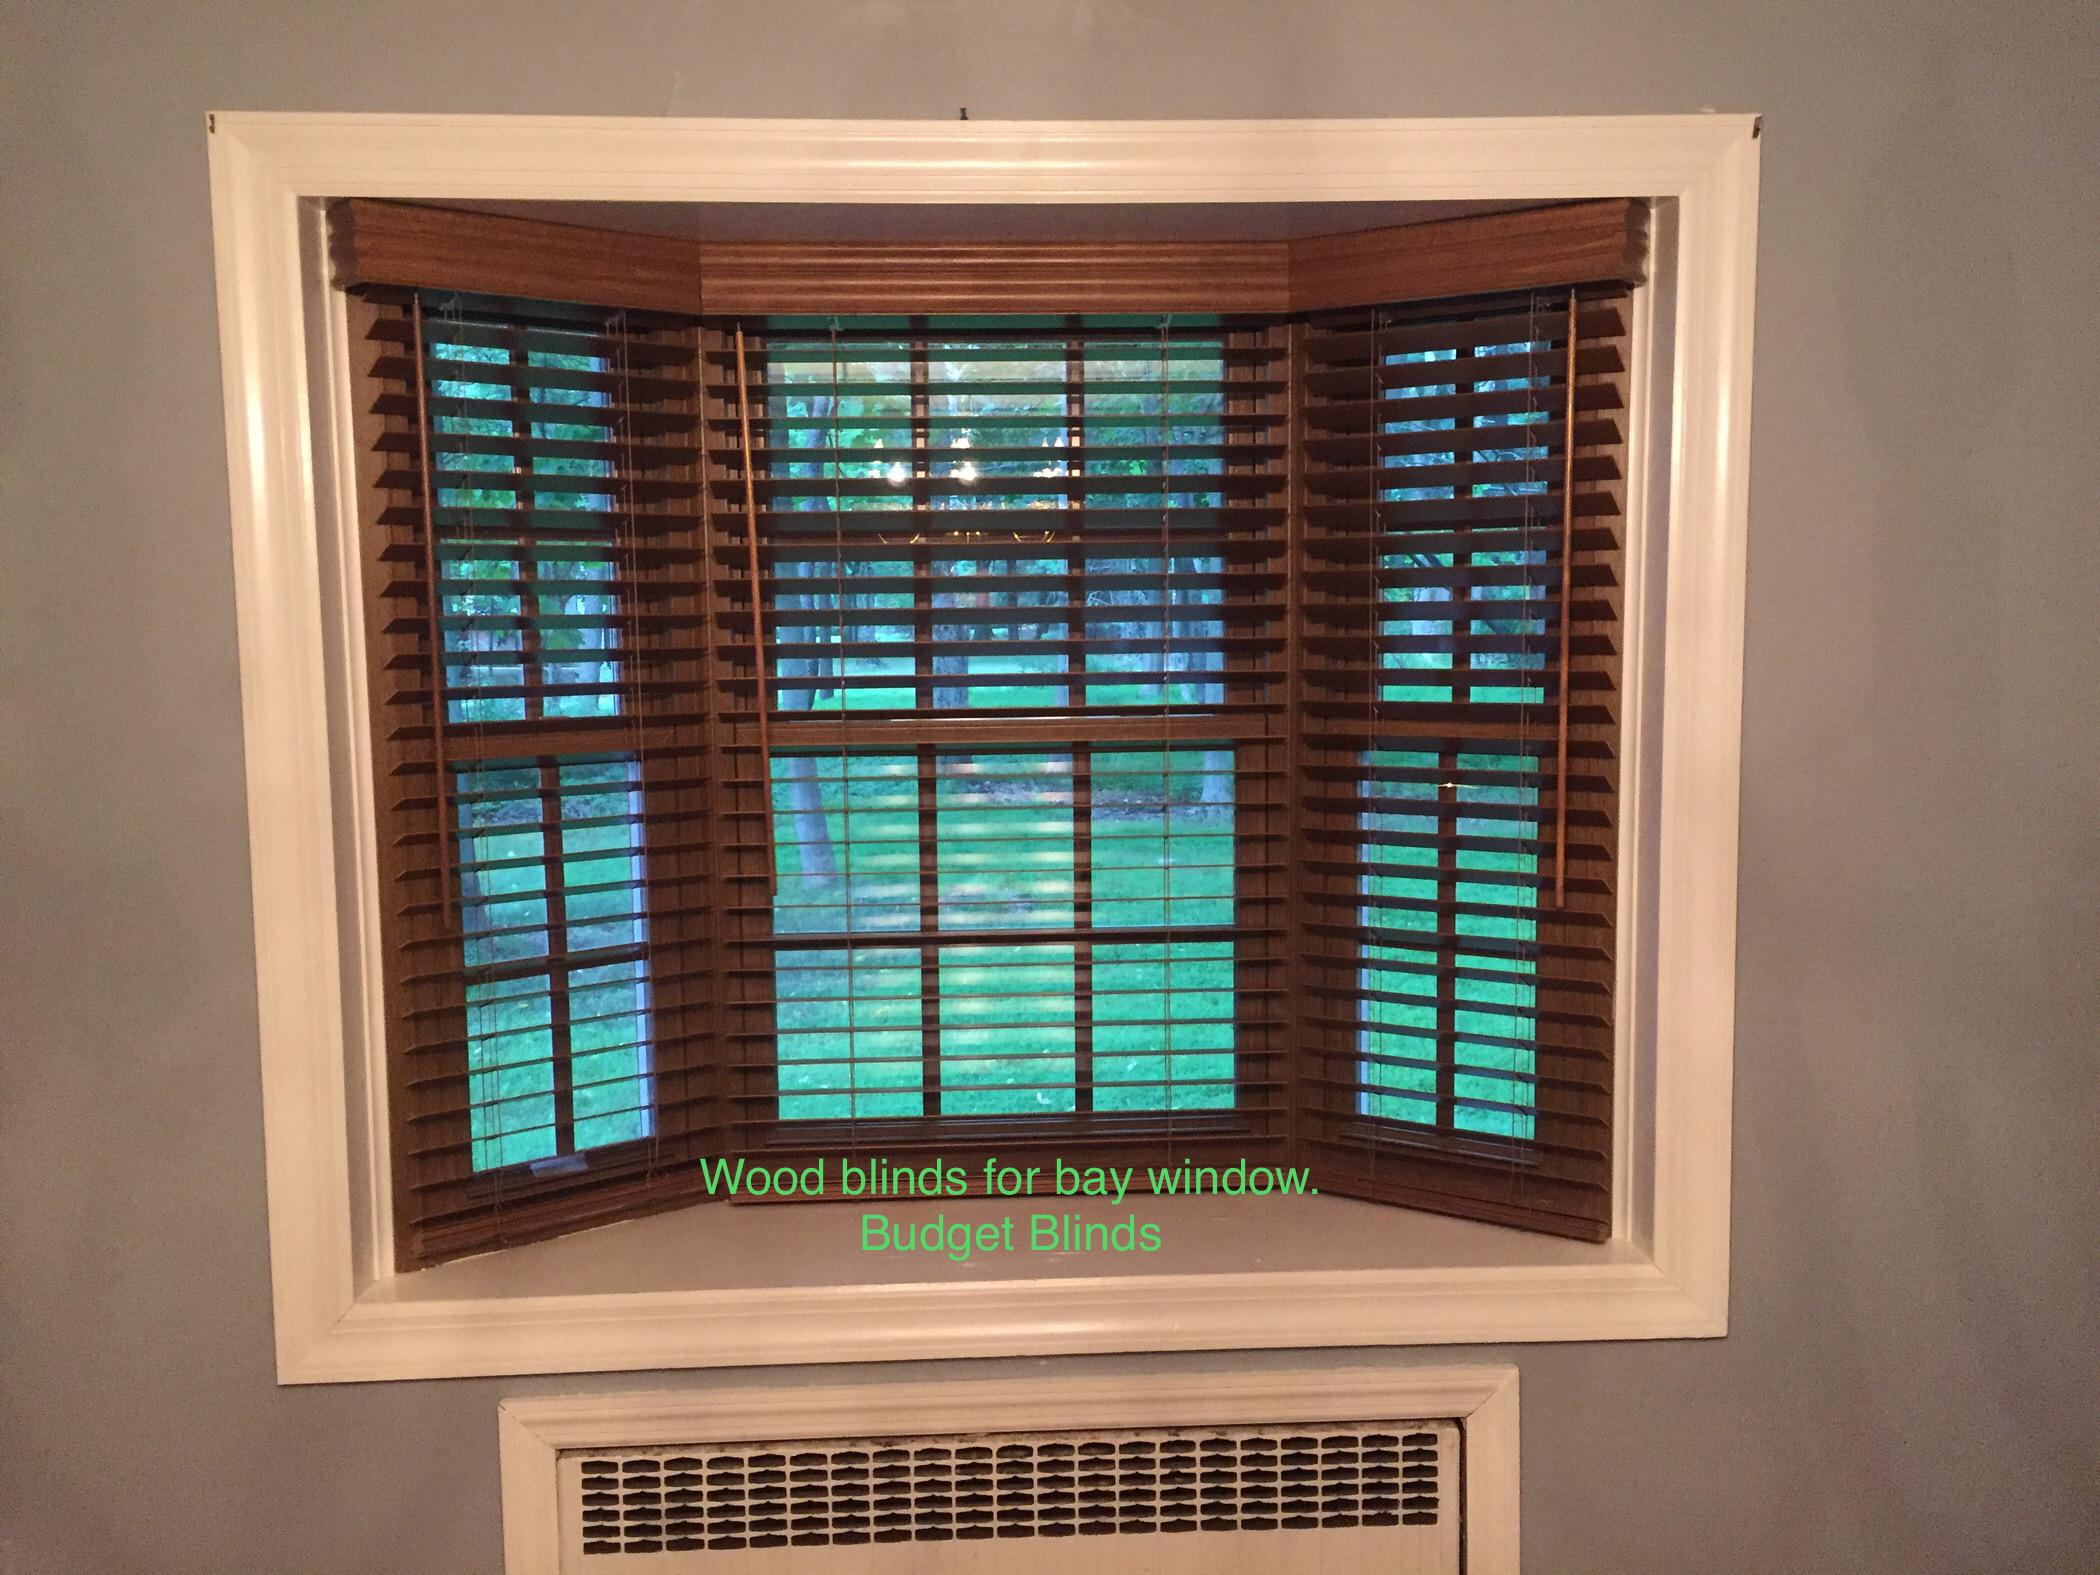 Wood blinds for bay window in Washington, NJ